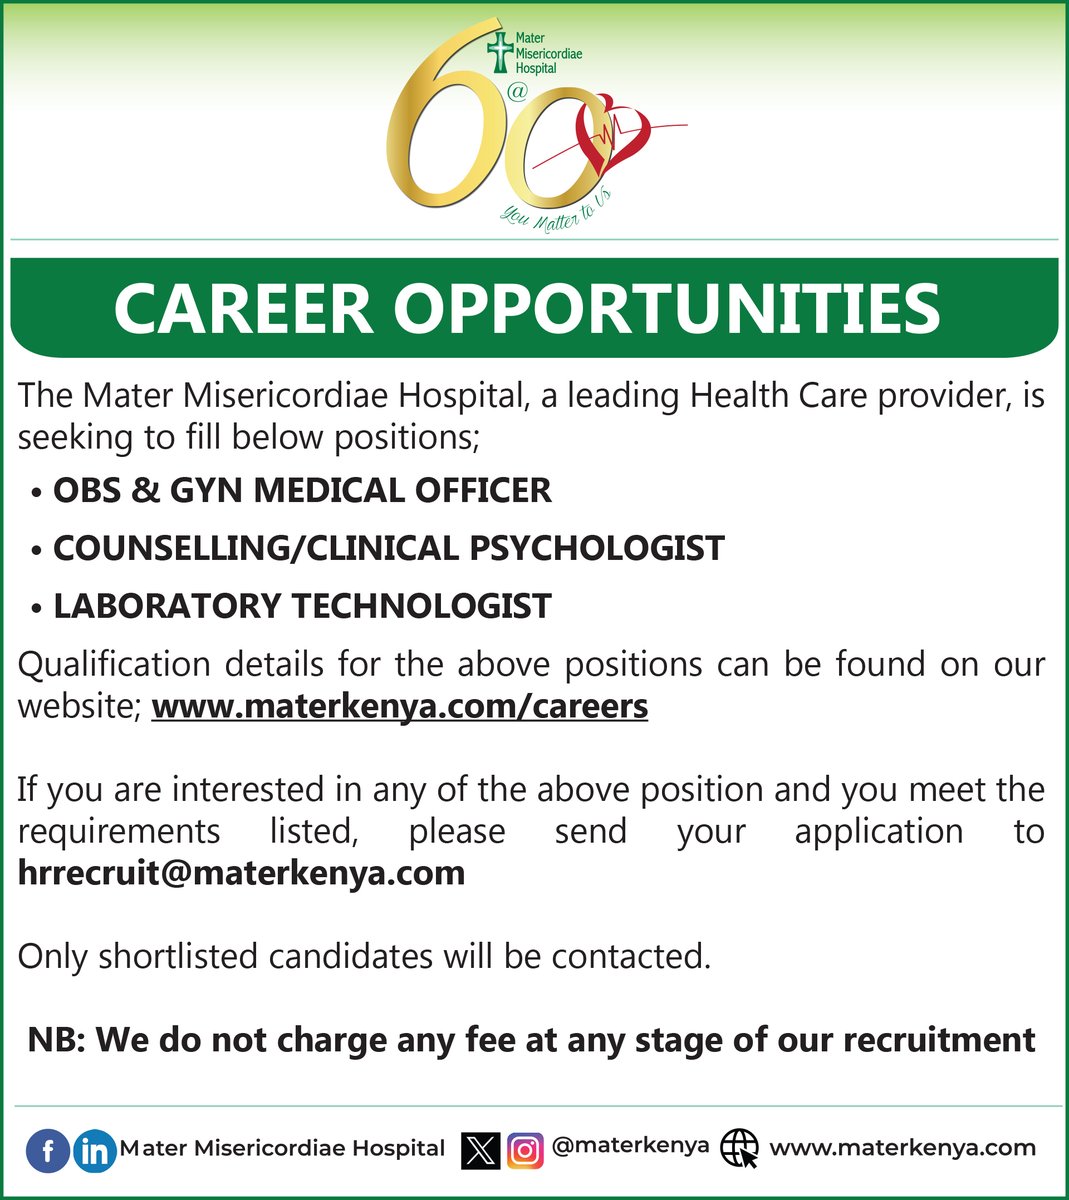 We are hiring! Check materkenya.com/careers for more details.